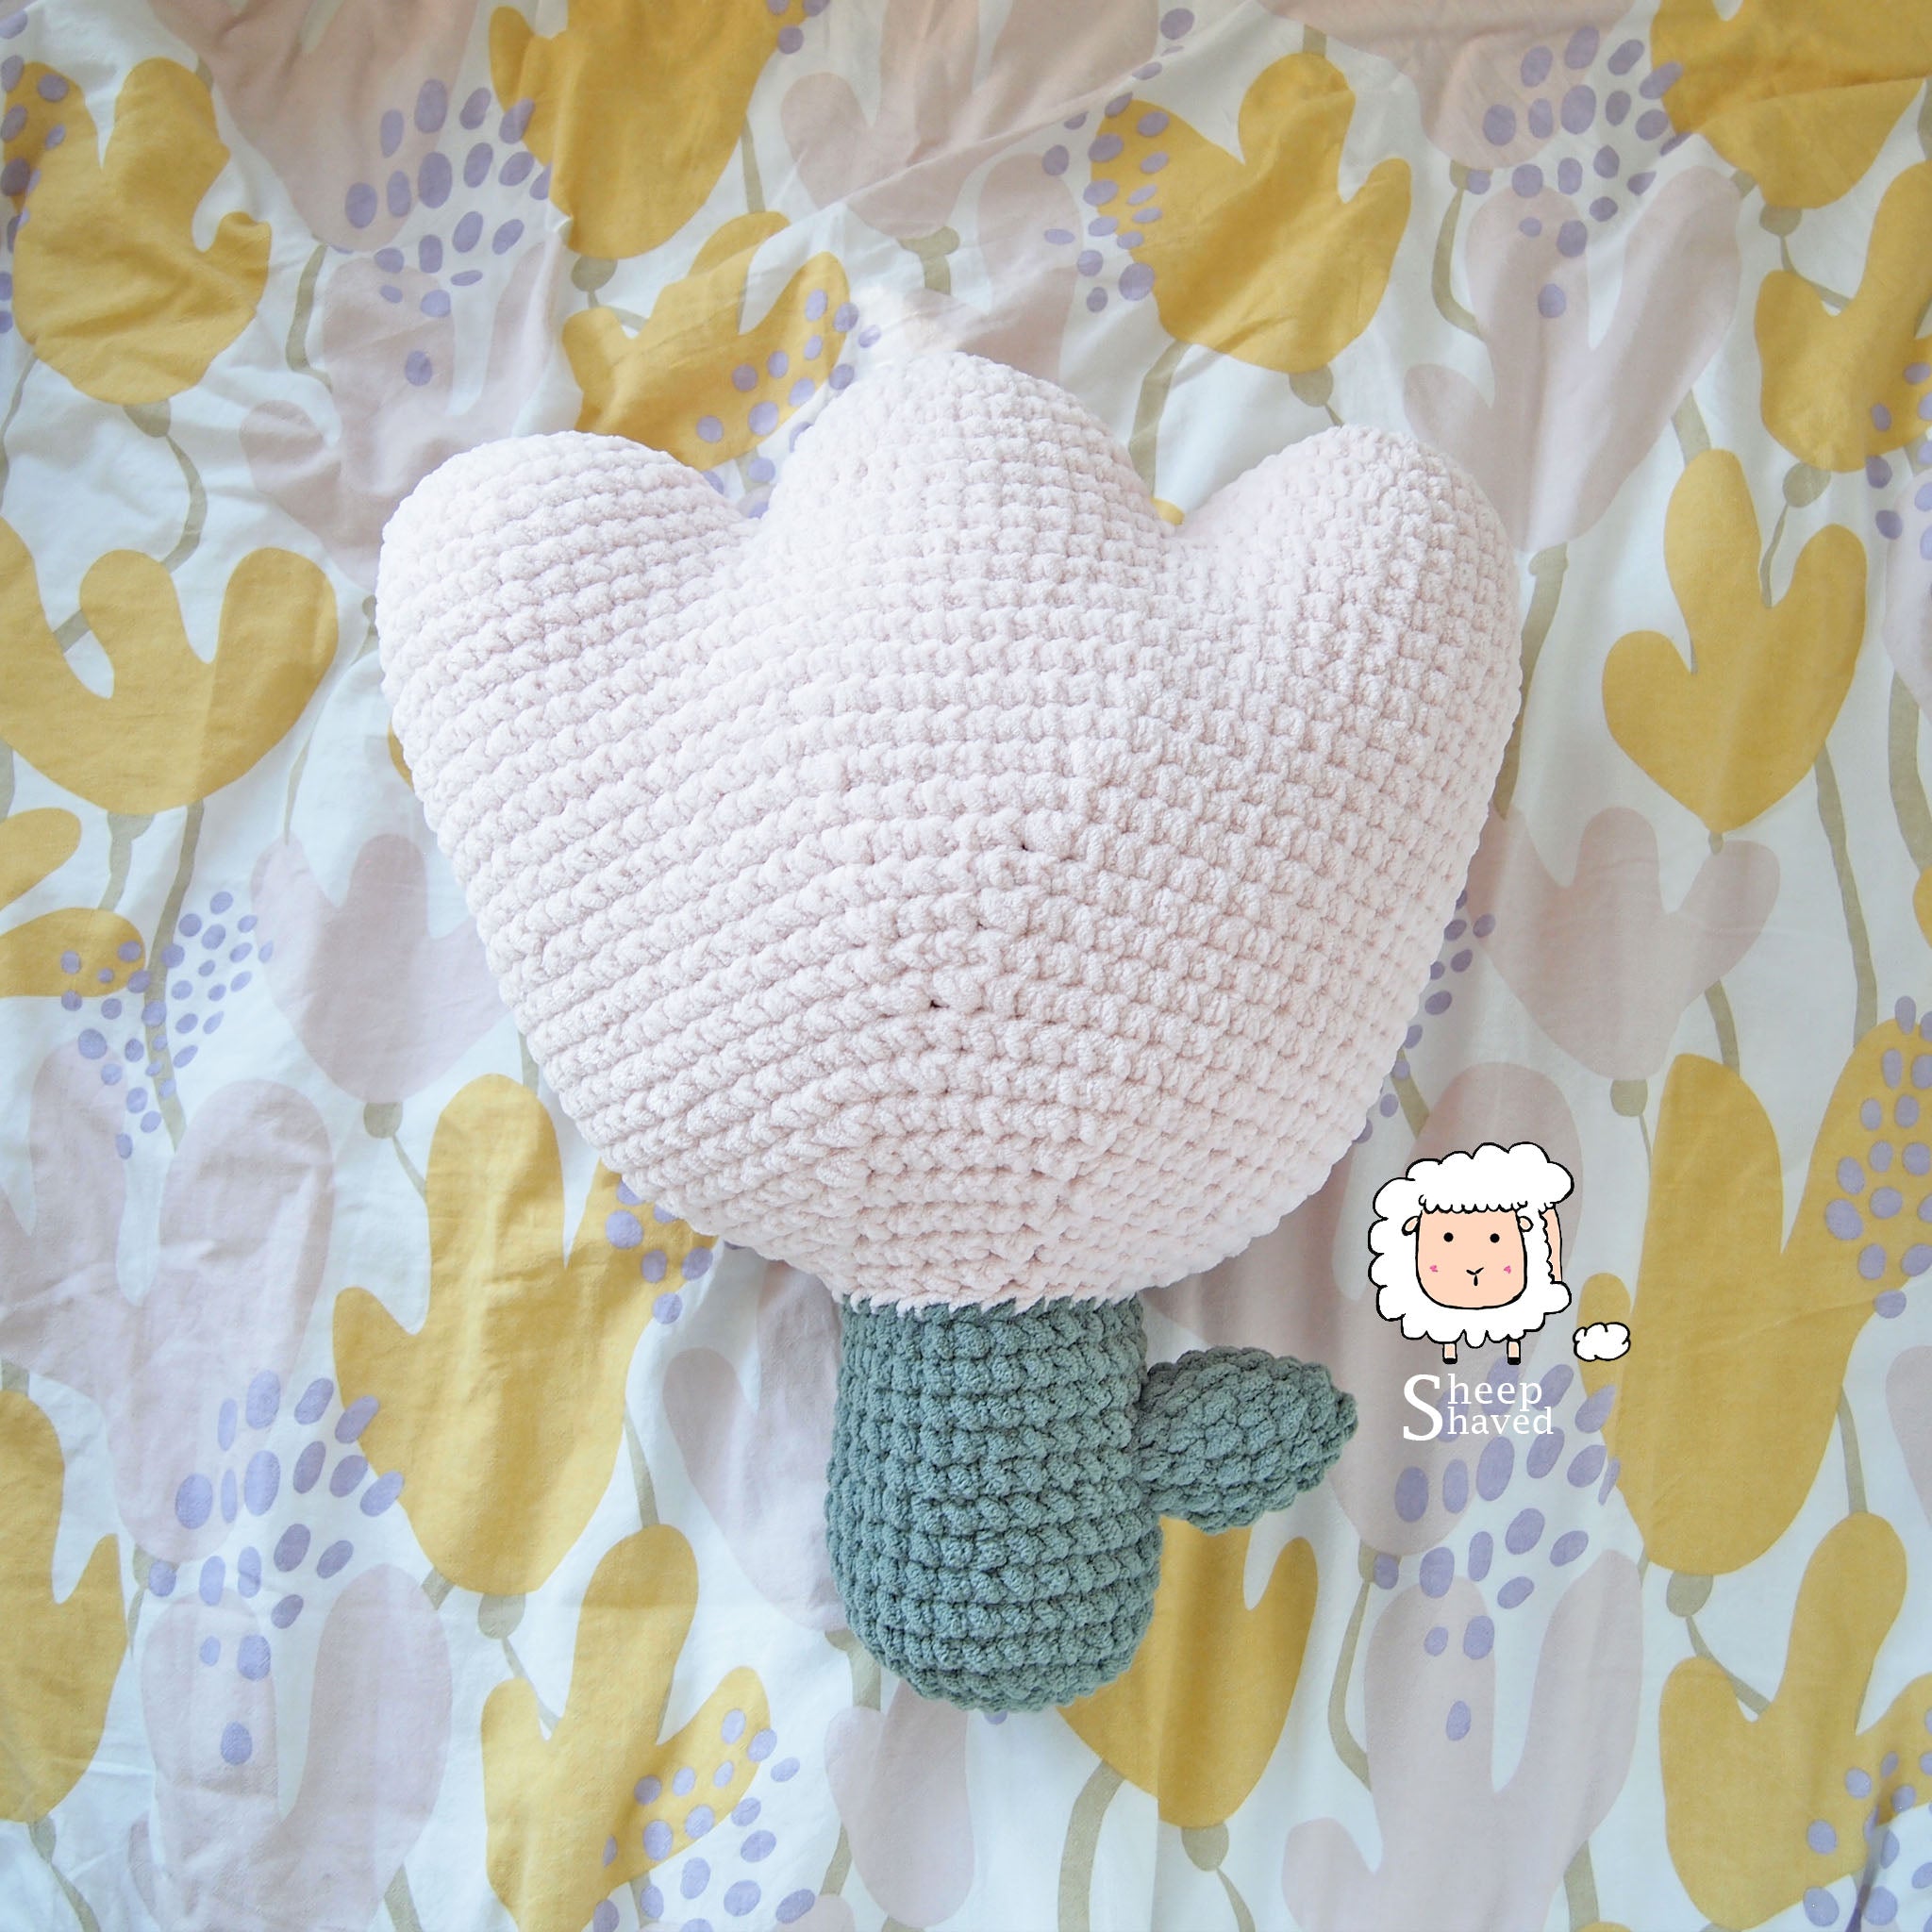 Tulip Pillow Crochet Pattern